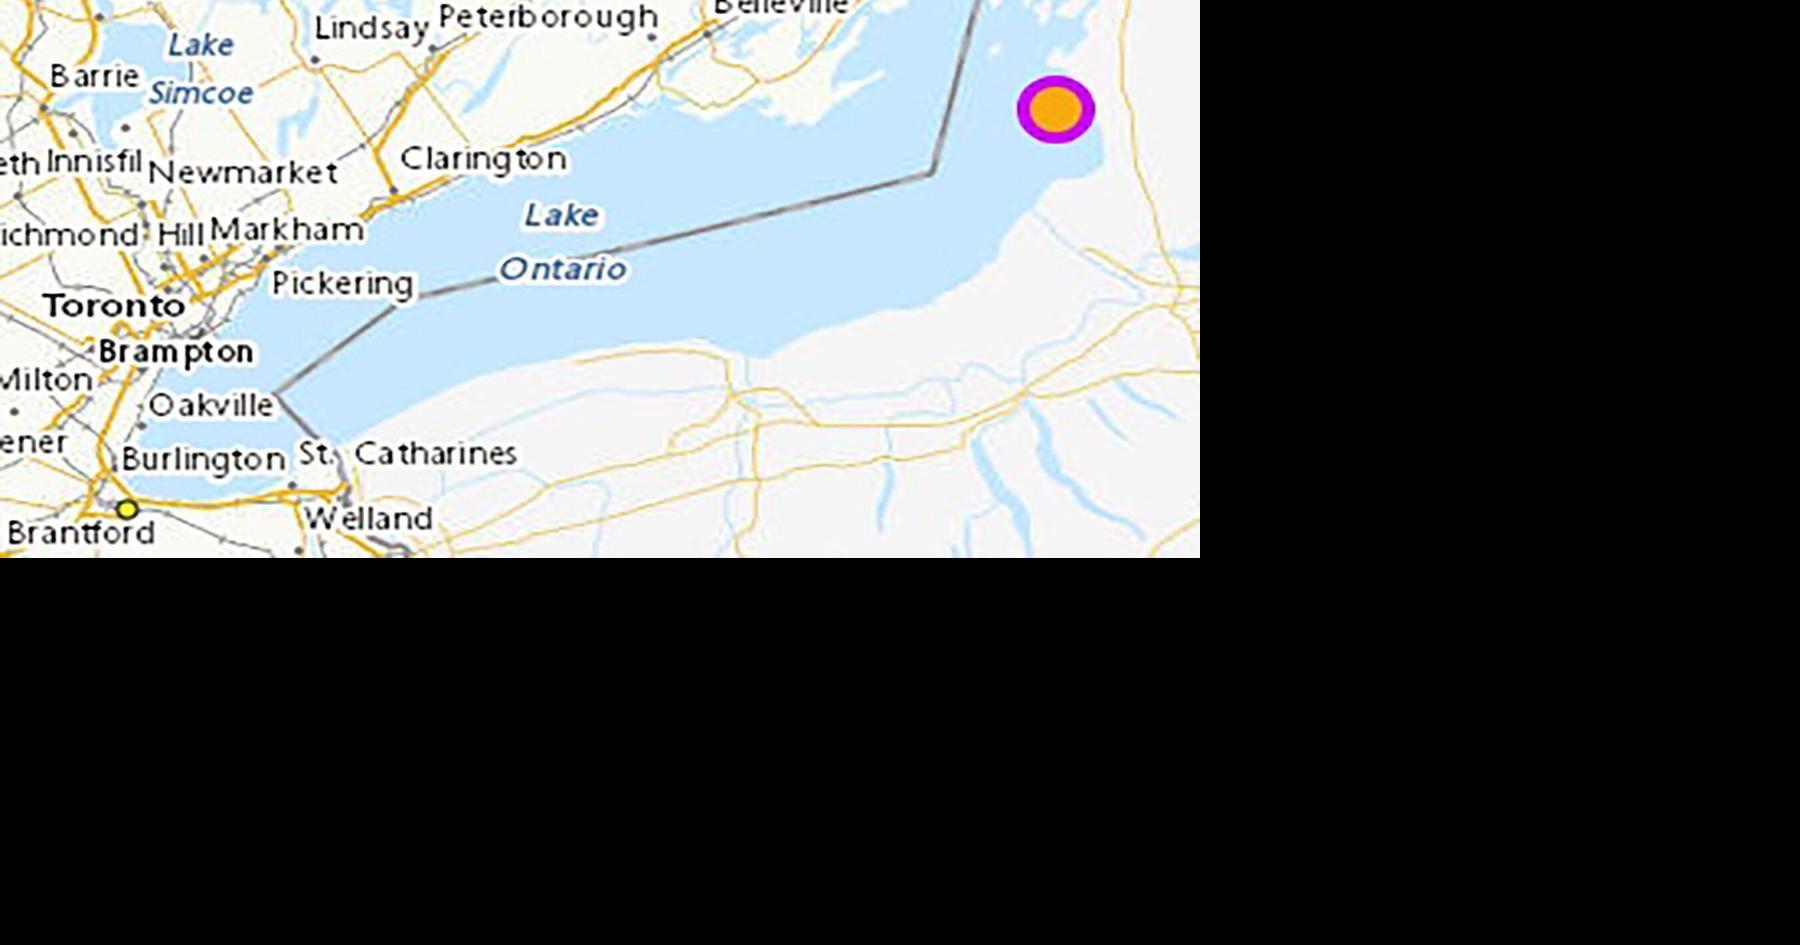 The June 28 earthquake hits the eastern end of Lake Ontario